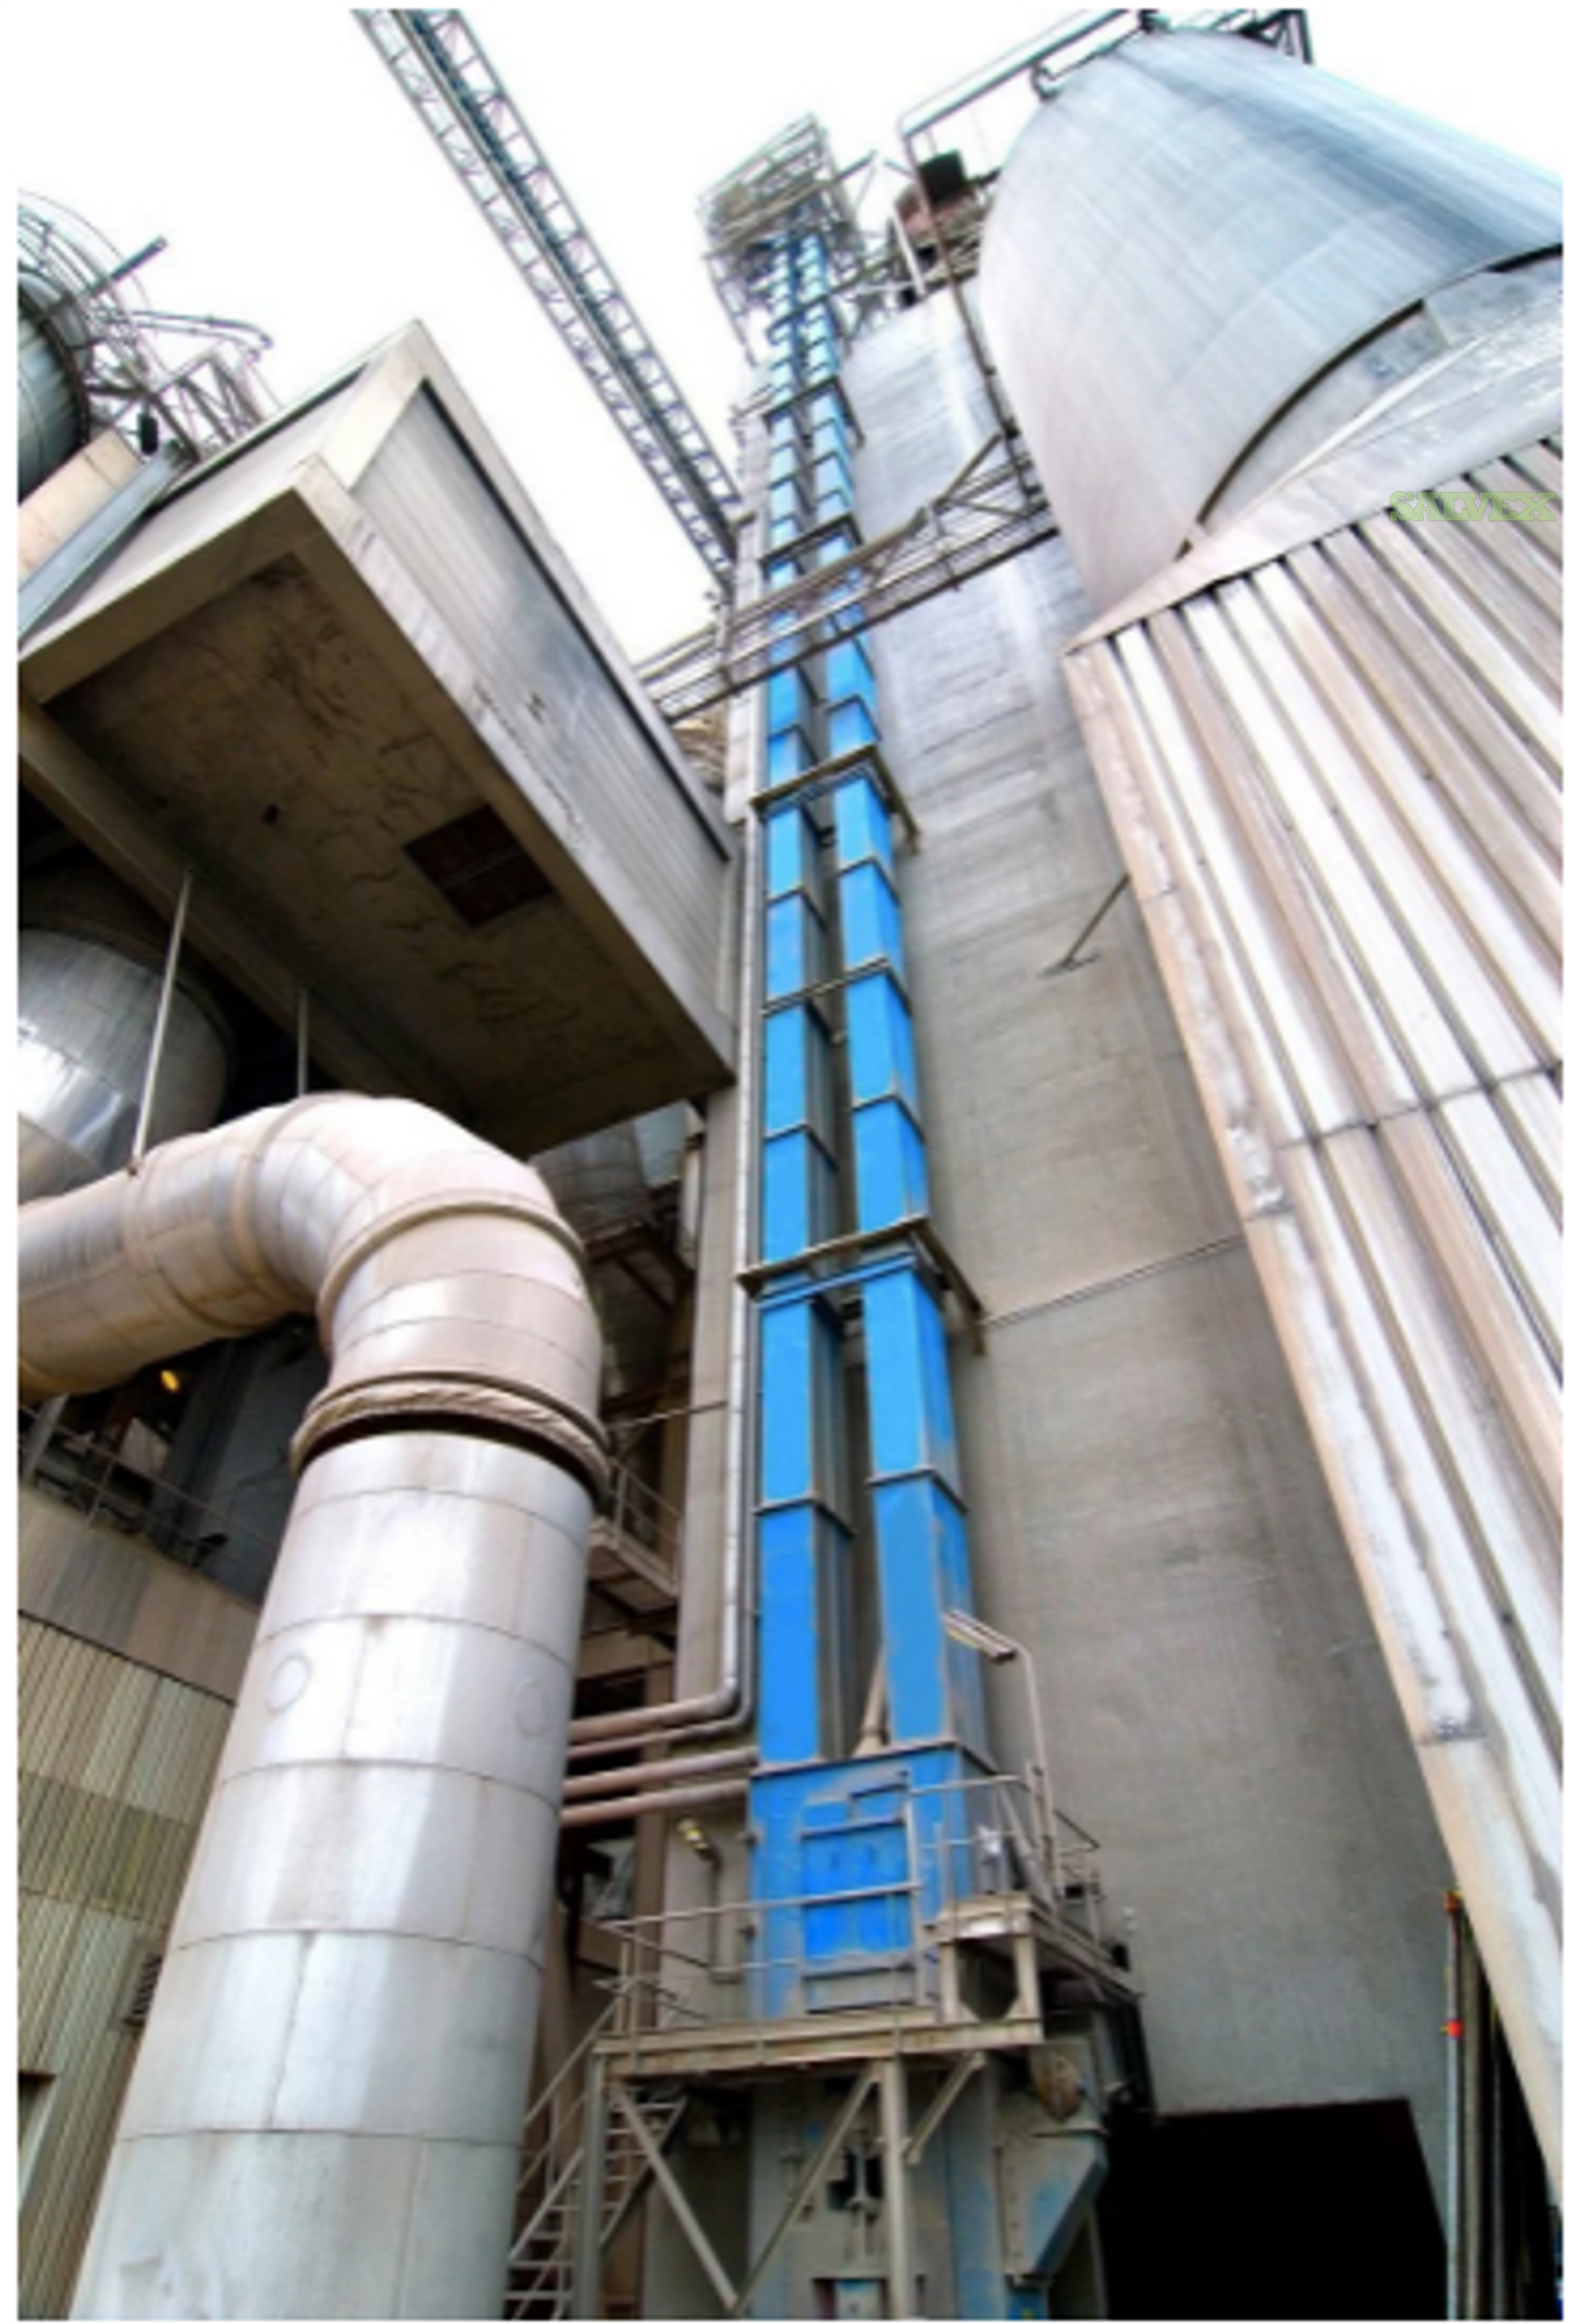 Aumund BWG Type Belt Bucket Elevators - for Cement Industry (2 Units)